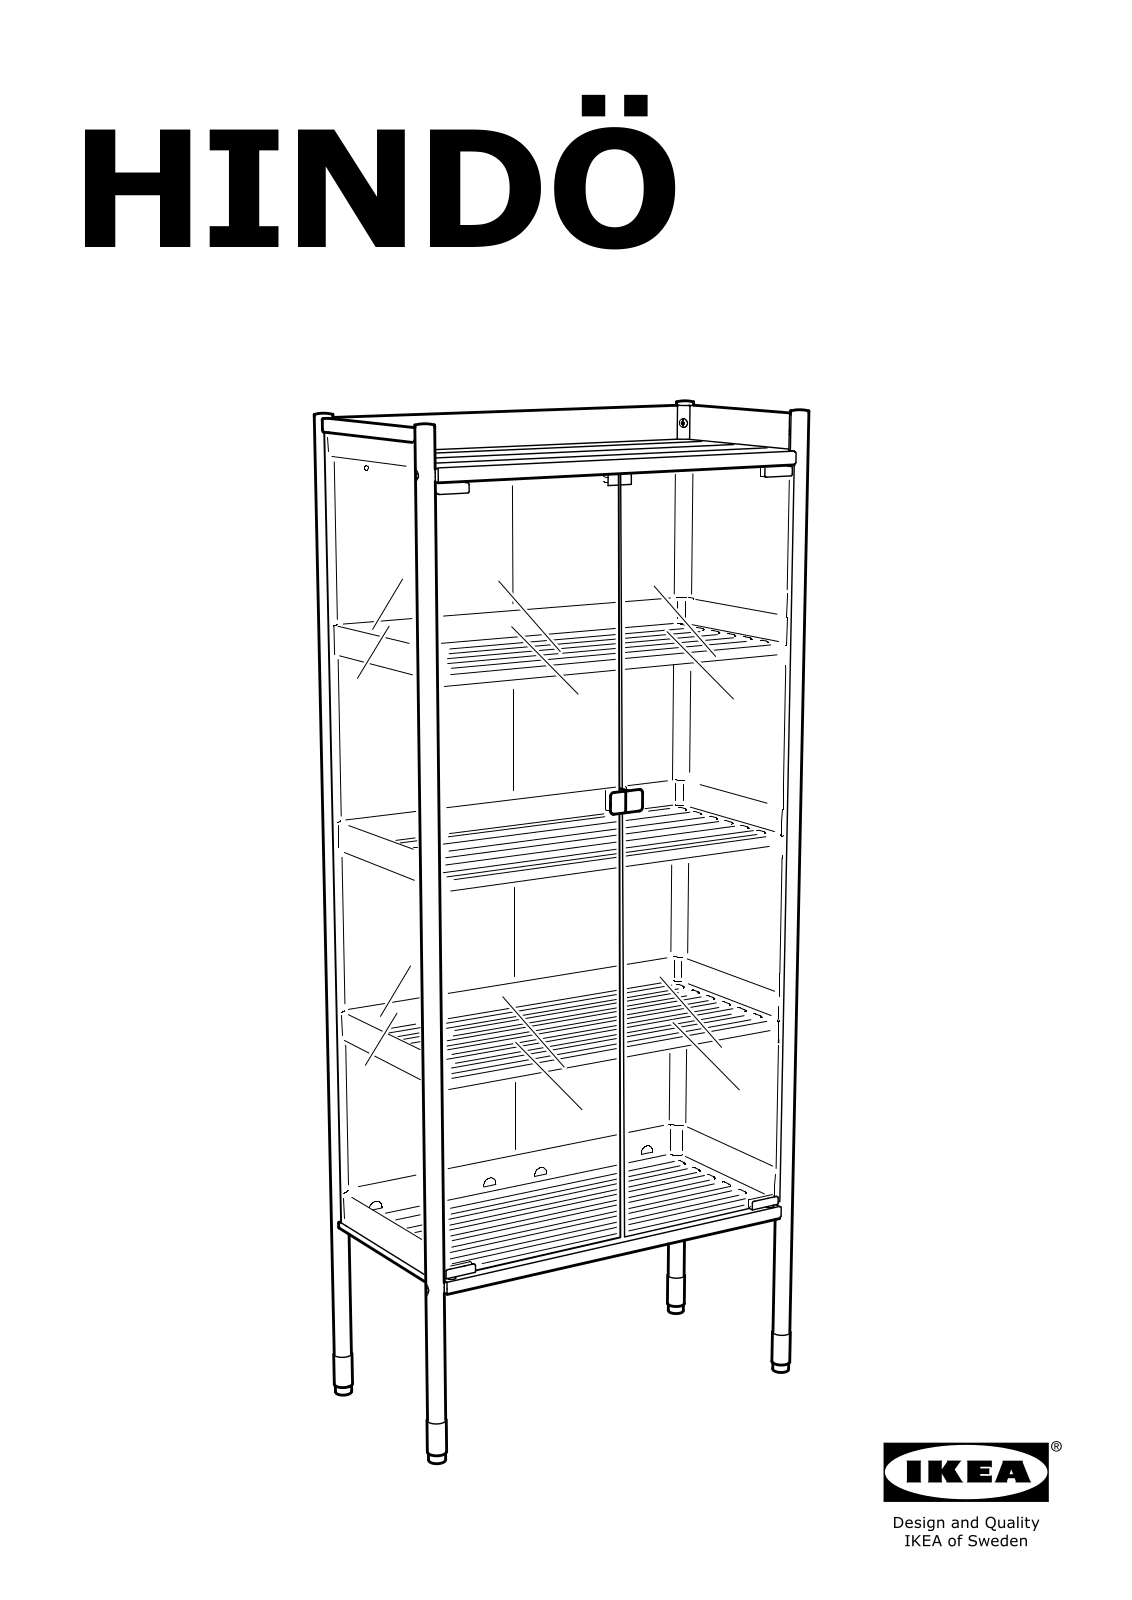 IKEA HINDO User Manual